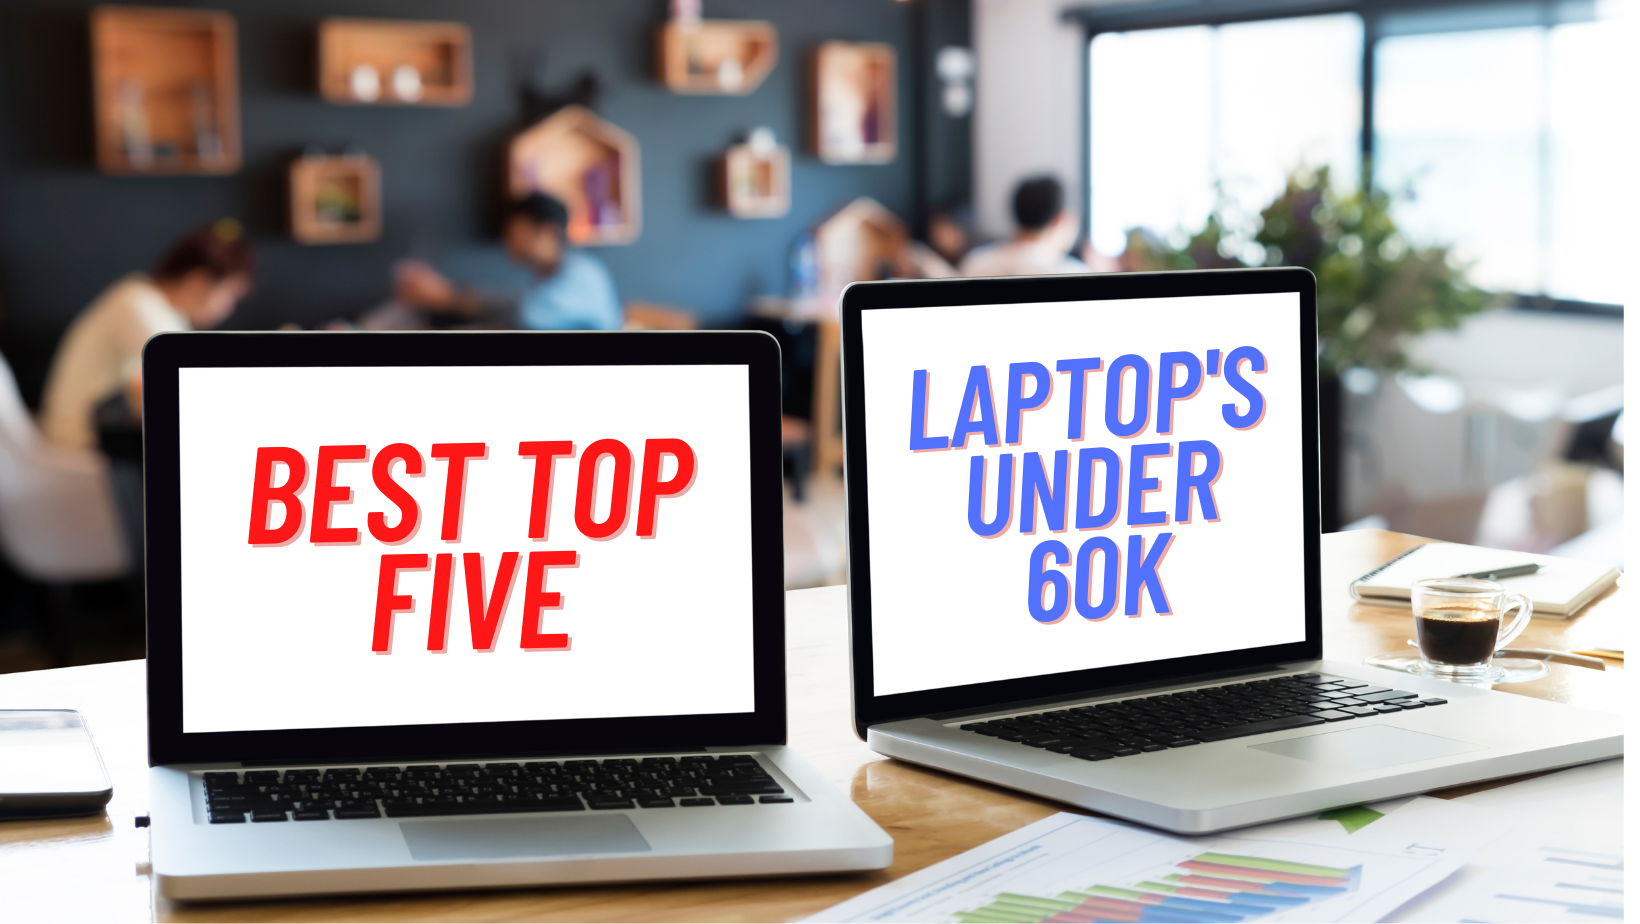 Best Top 5 laptop under 60K